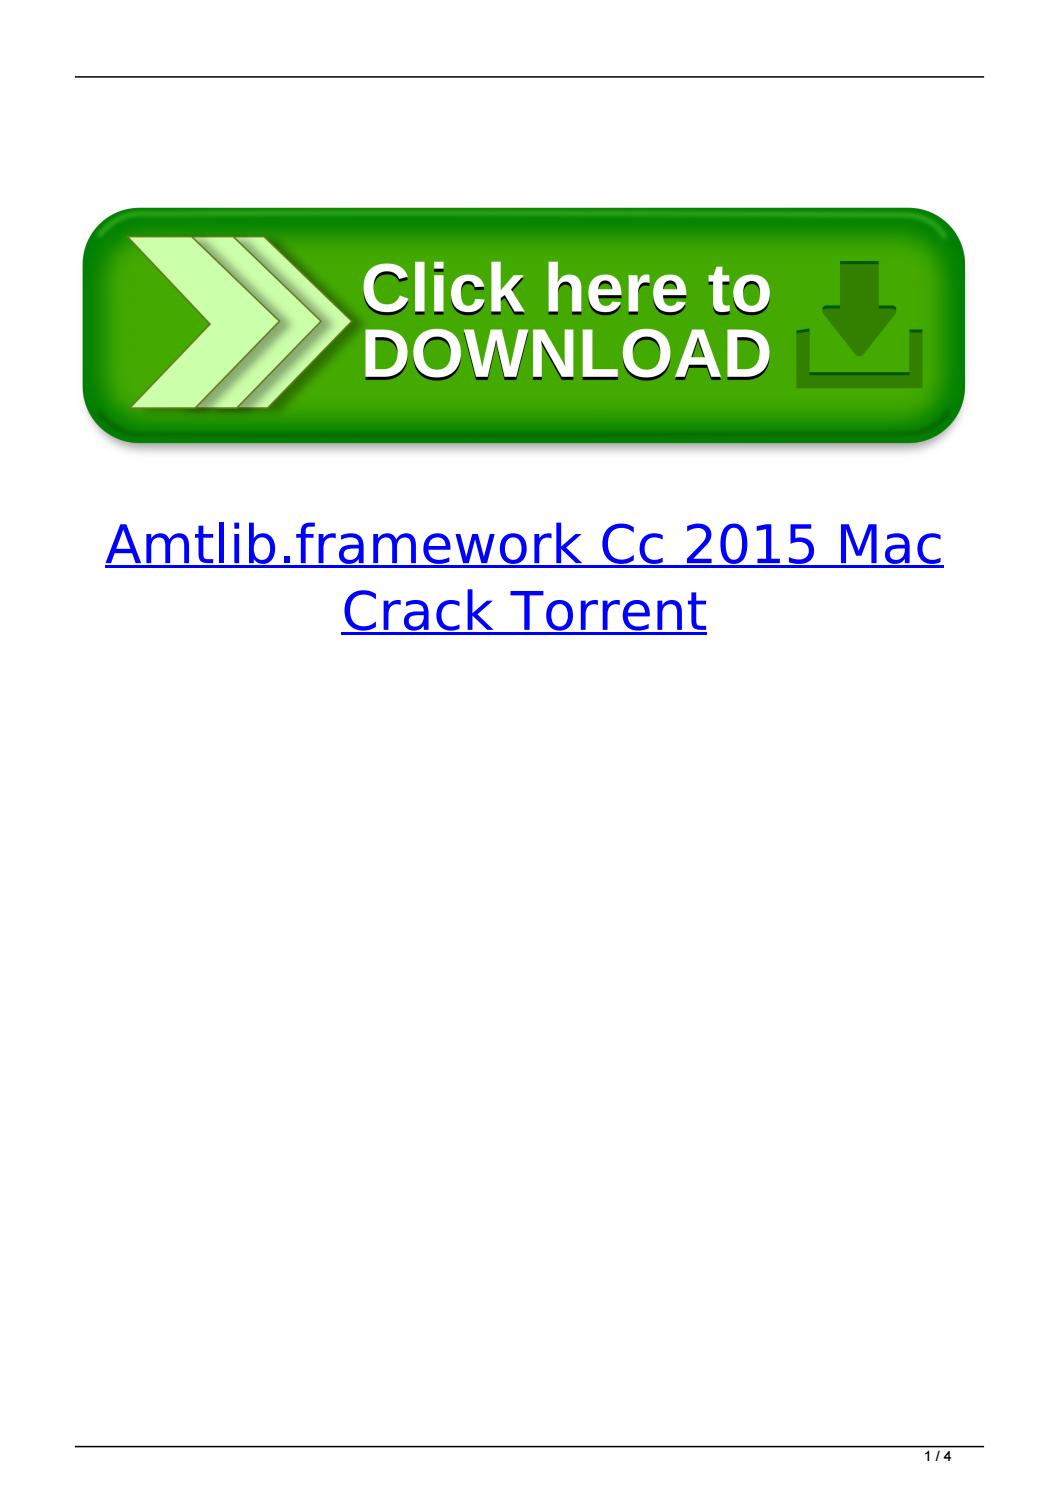 Amtlib framework cc 2015 mac download windows 10